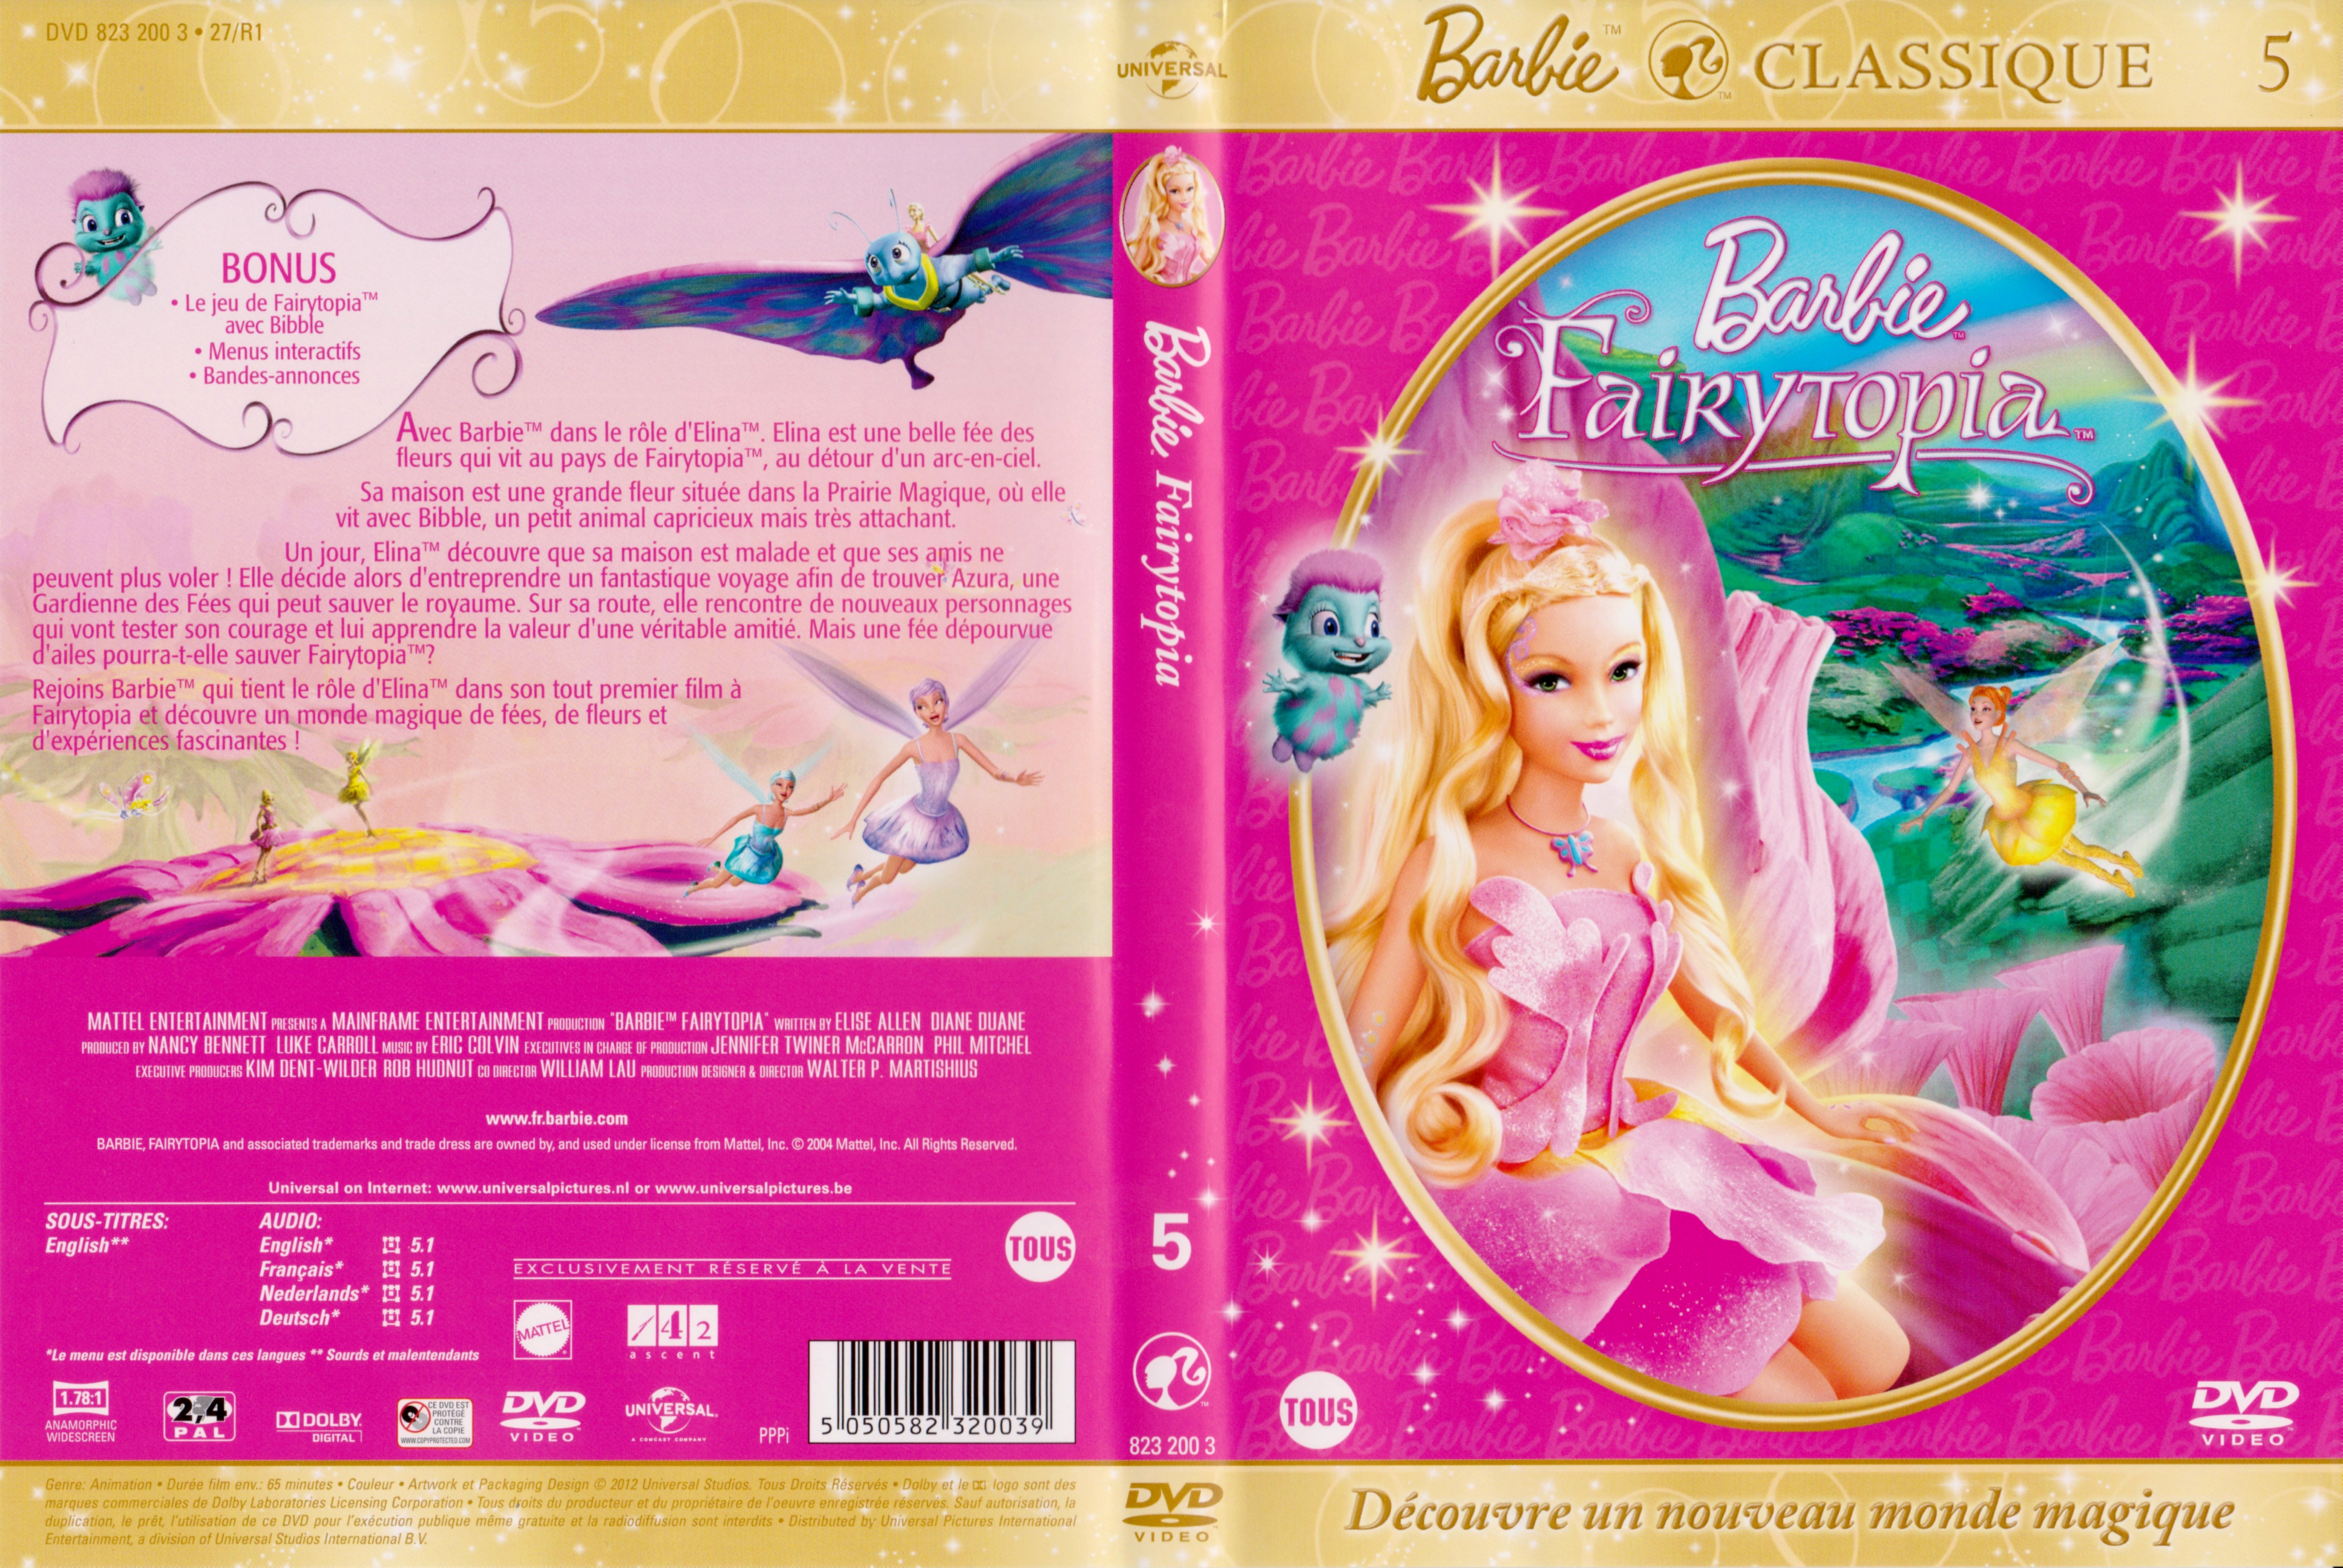 Jaquette DVD Barbie Fairytopia v2